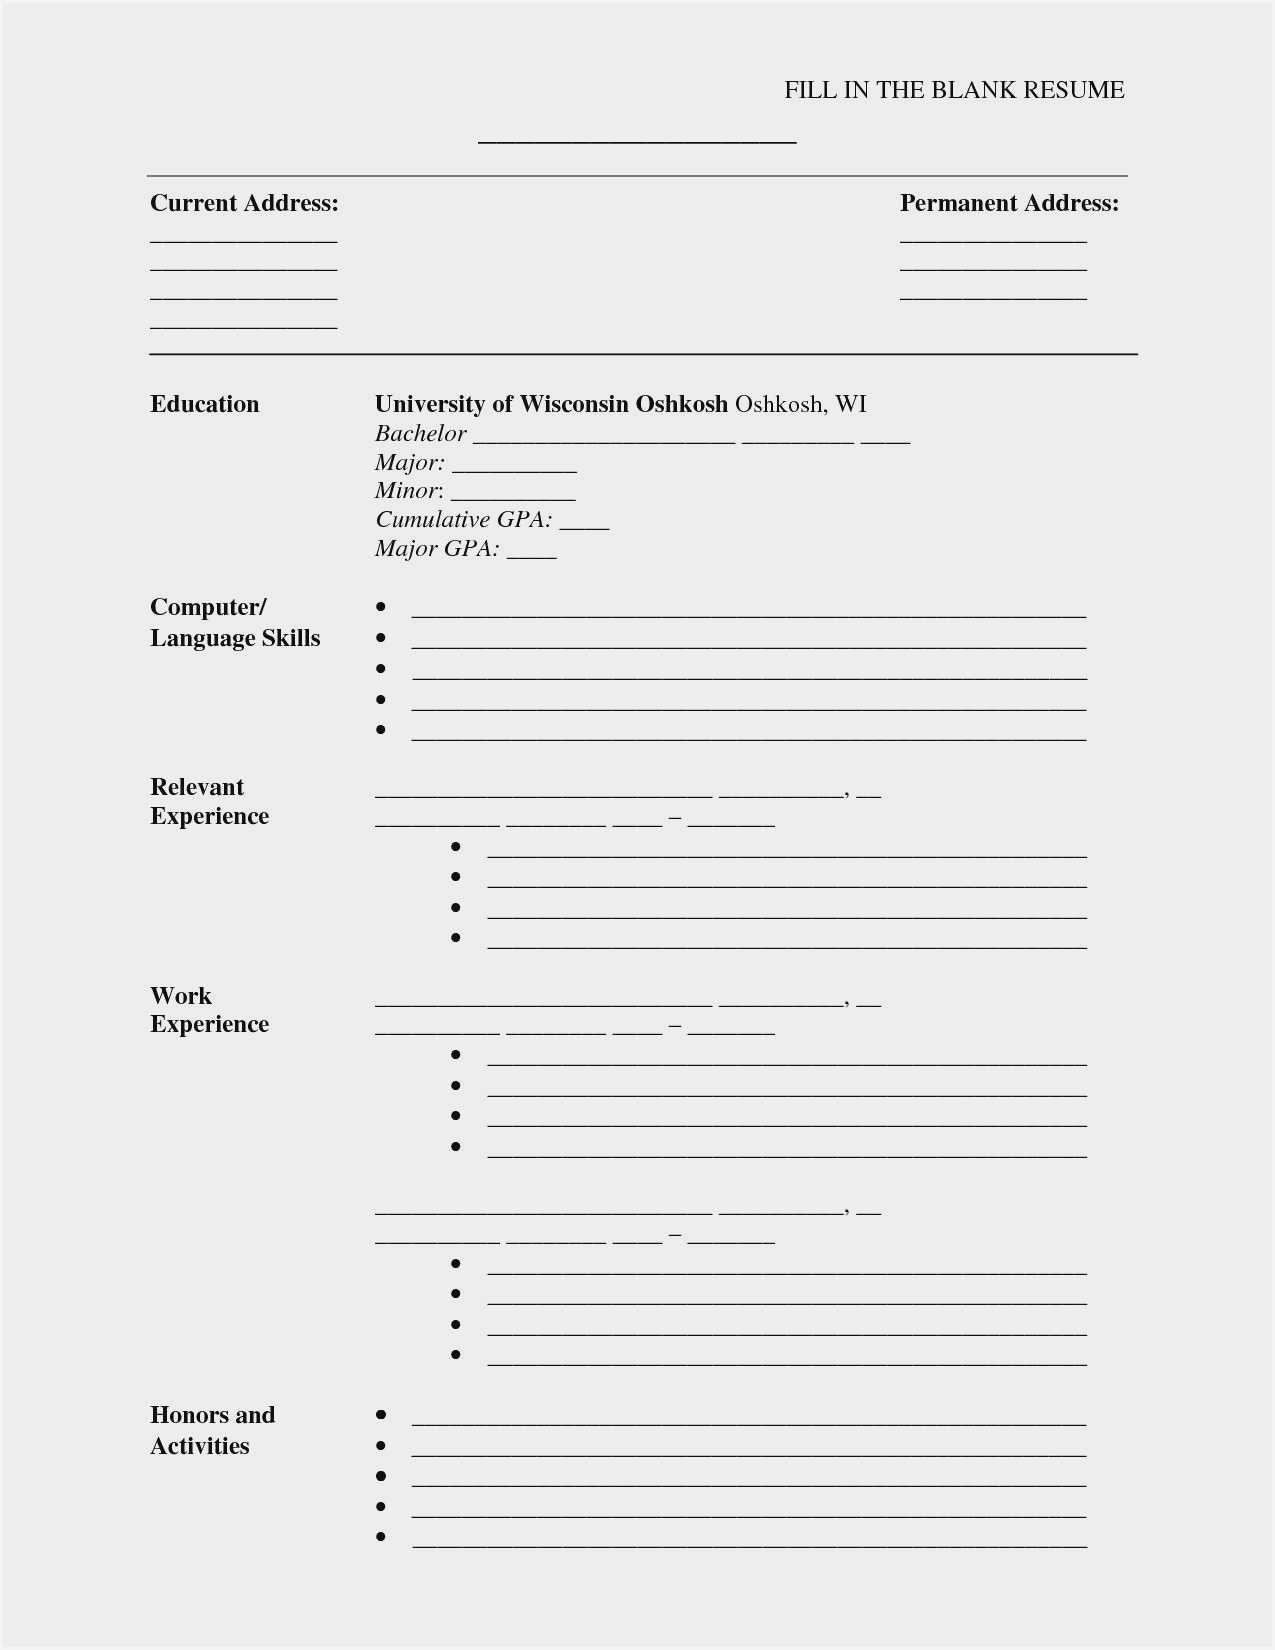 Blank Cv Format Word Download – Resume : Resume Sample #3945 In Free Blank Resume Templates For Microsoft Word